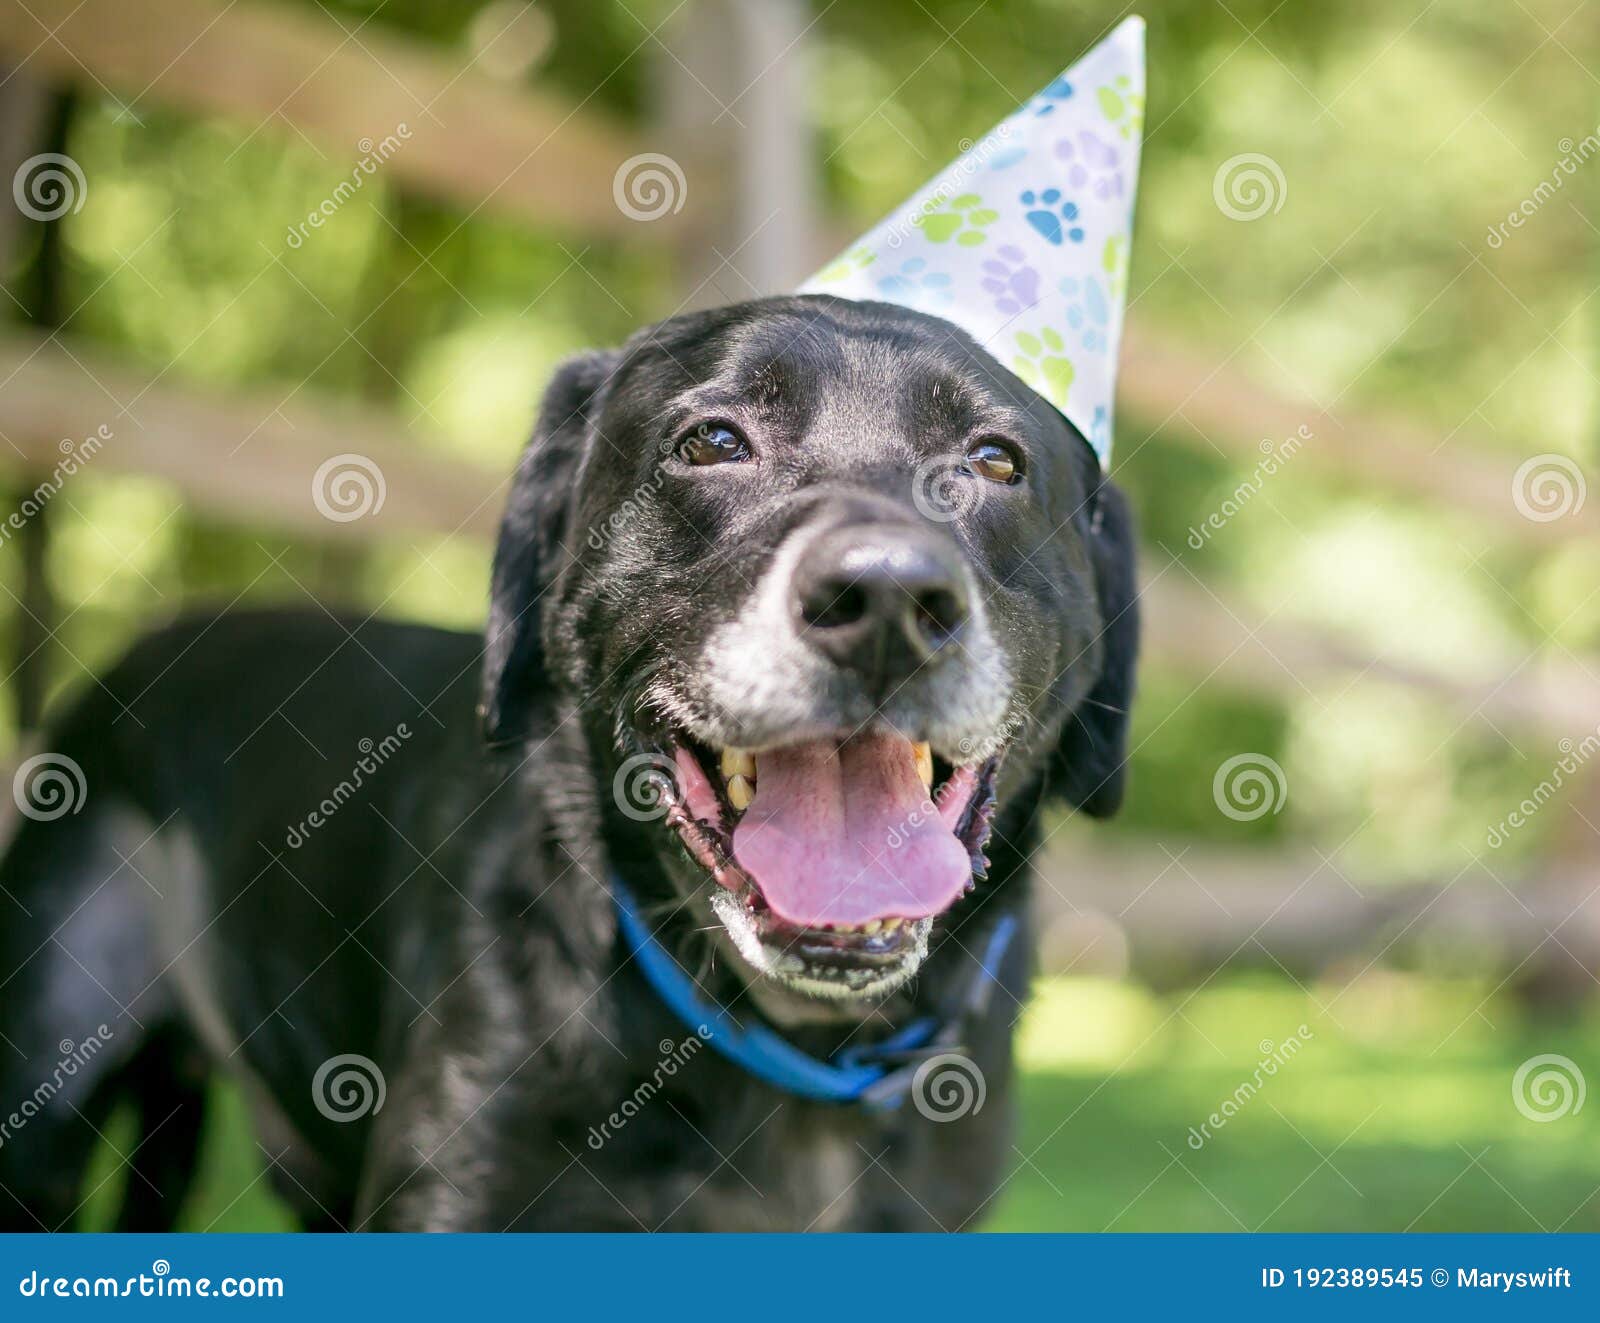 black labrador birthday